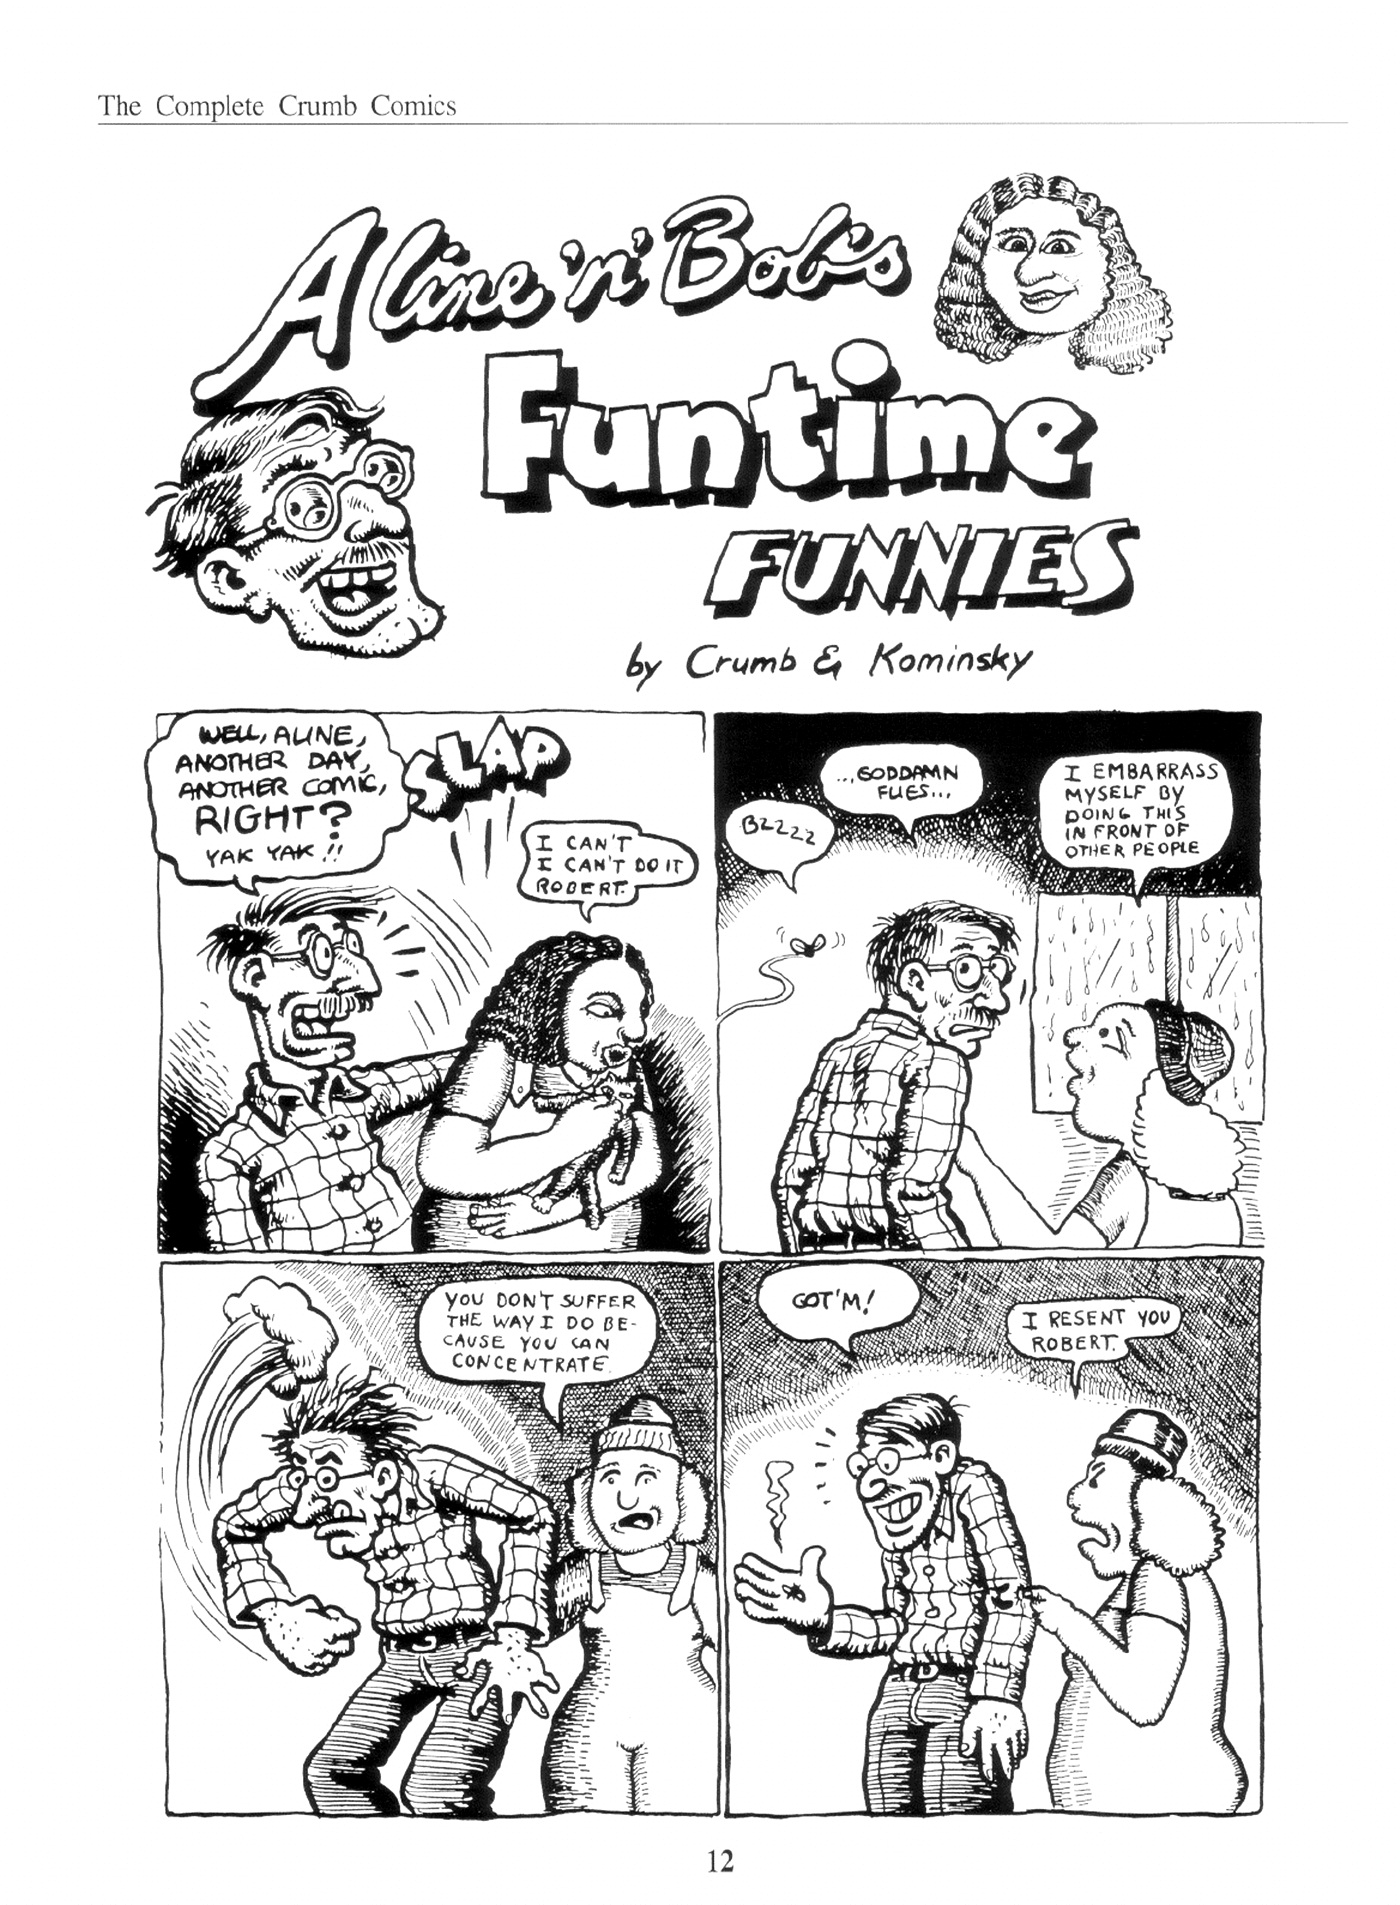 Read online The Complete Crumb Comics comic -  Issue # TPB 10 - 21